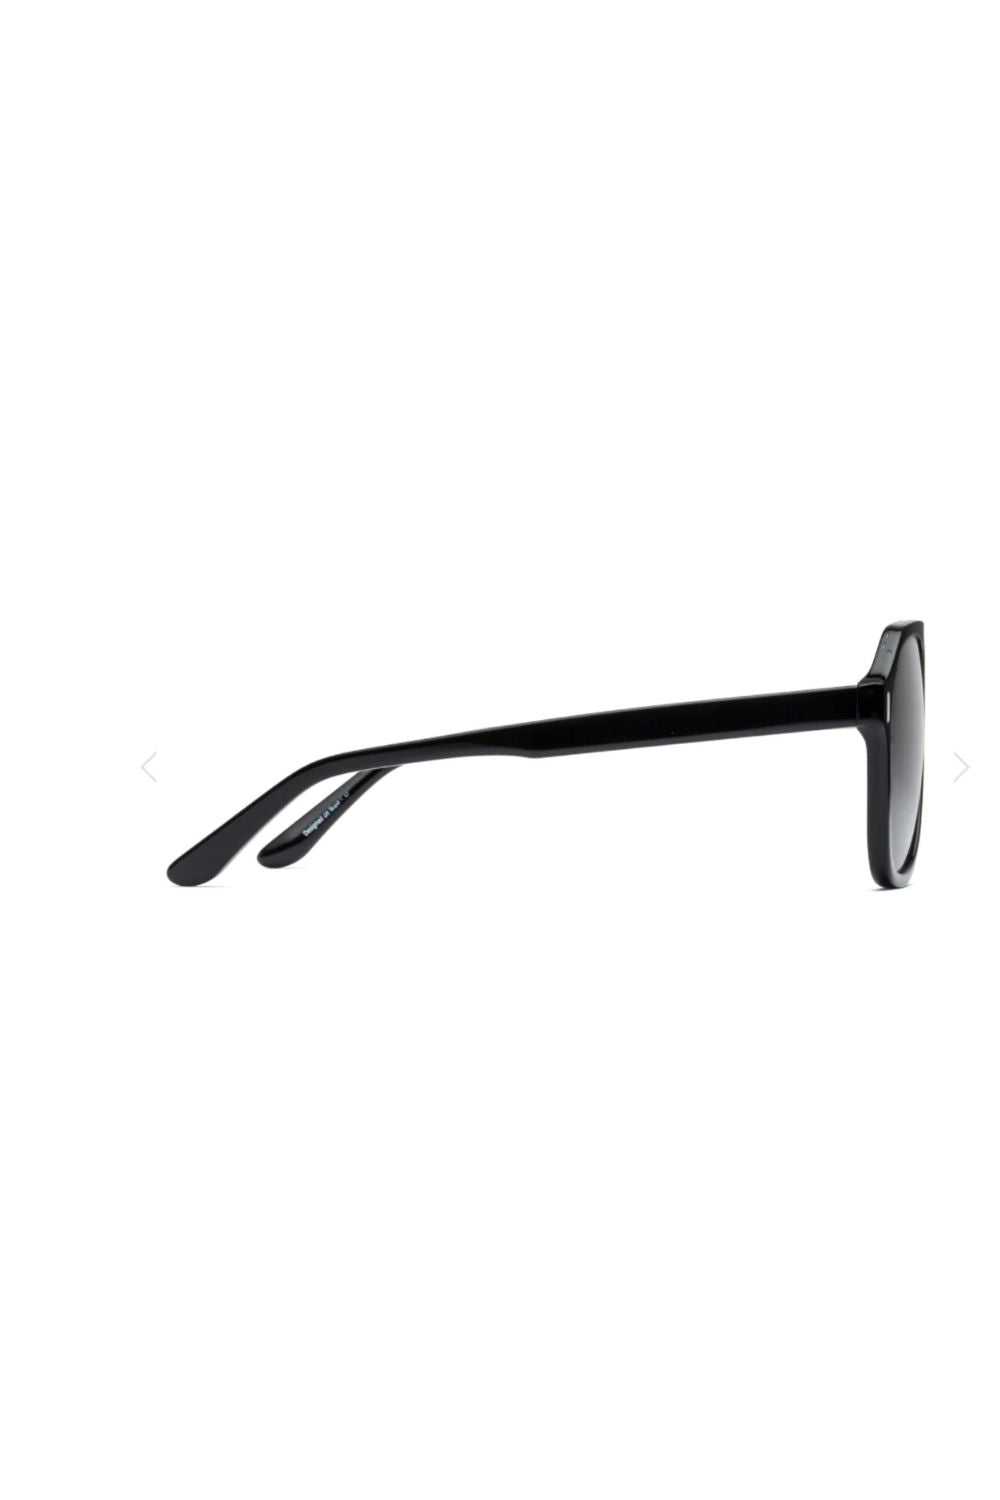 RCA Sunglasses - Gloss Black